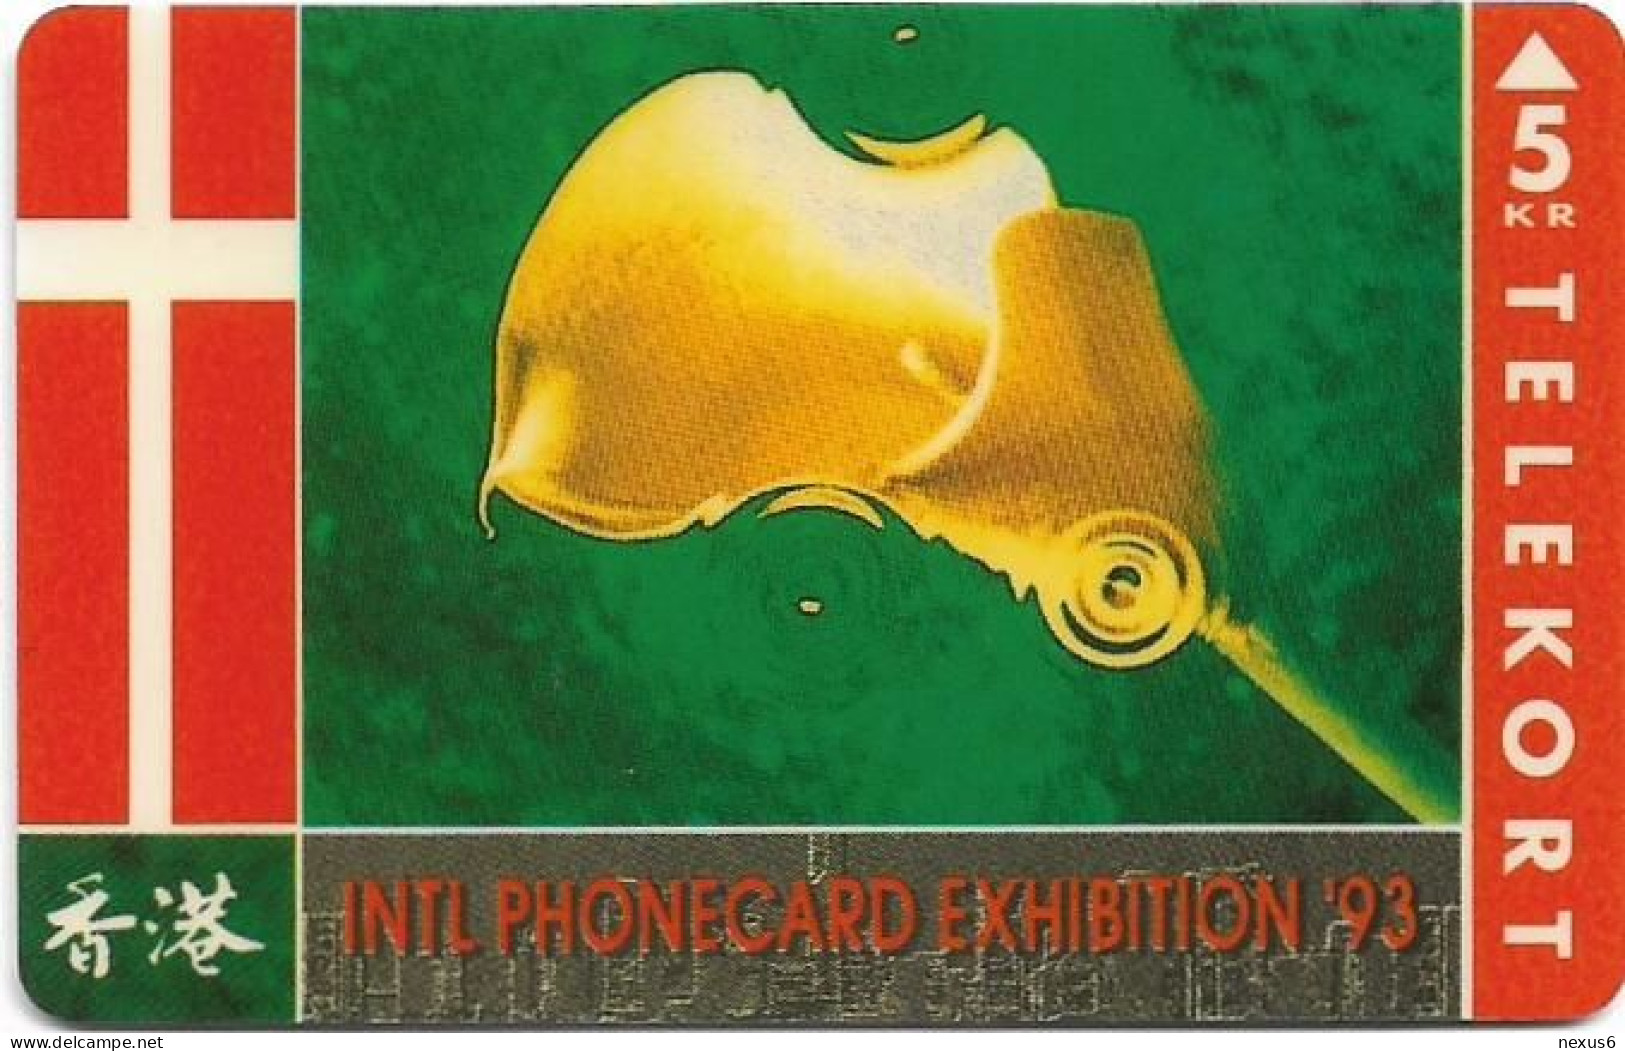 Denmark - KTAS - Intl. Phonecard Expo '93 Hong Kong - TDKP022 - 04.1993, 5kr, 4.000ex, Used - Danemark